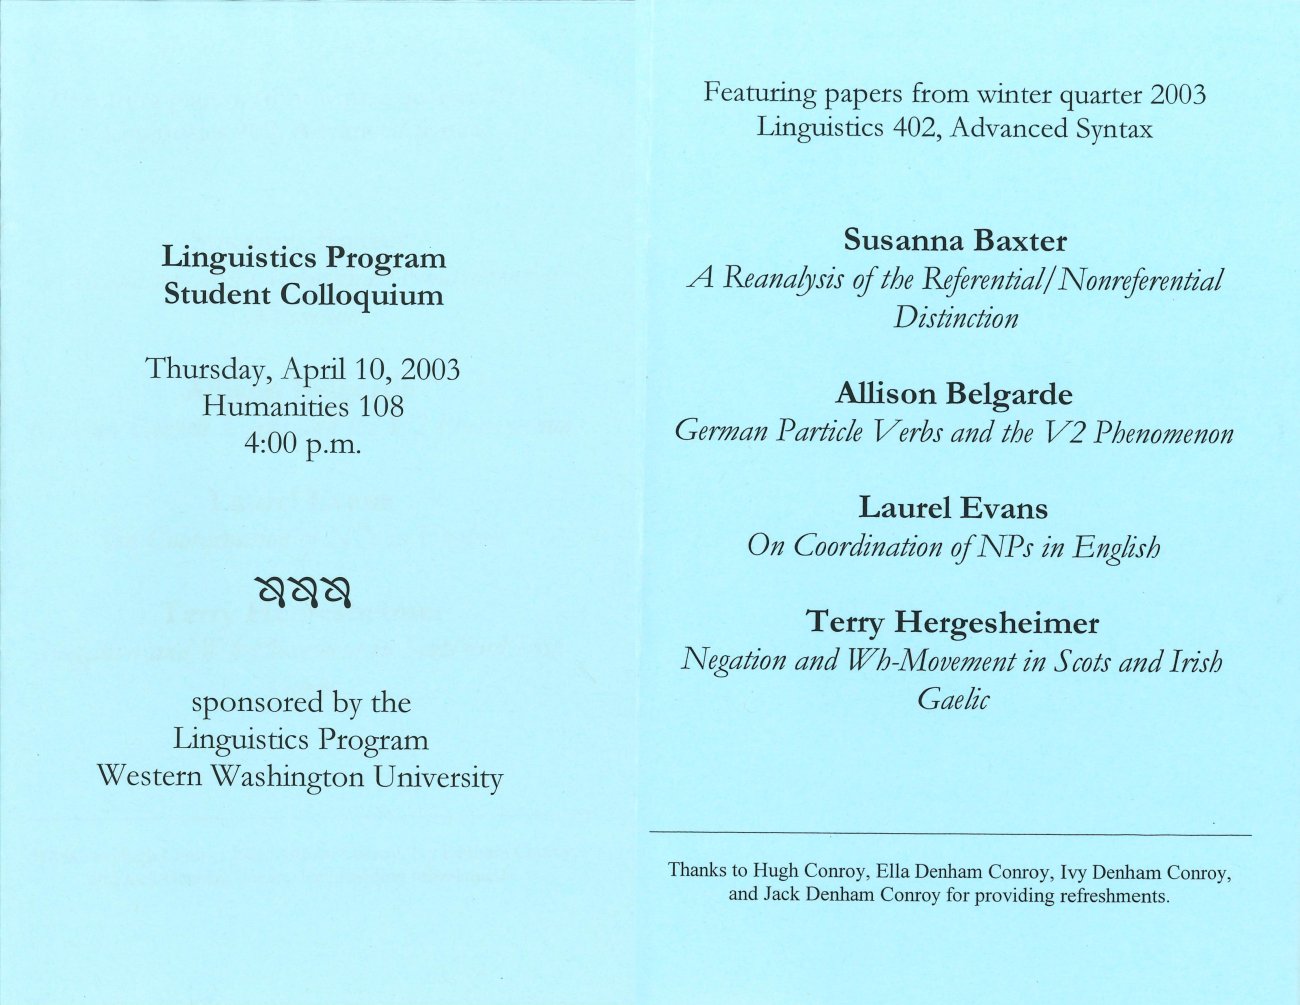 Program for April 10, 2003 Linguistics Program Student Colloquium. See webpage for details.